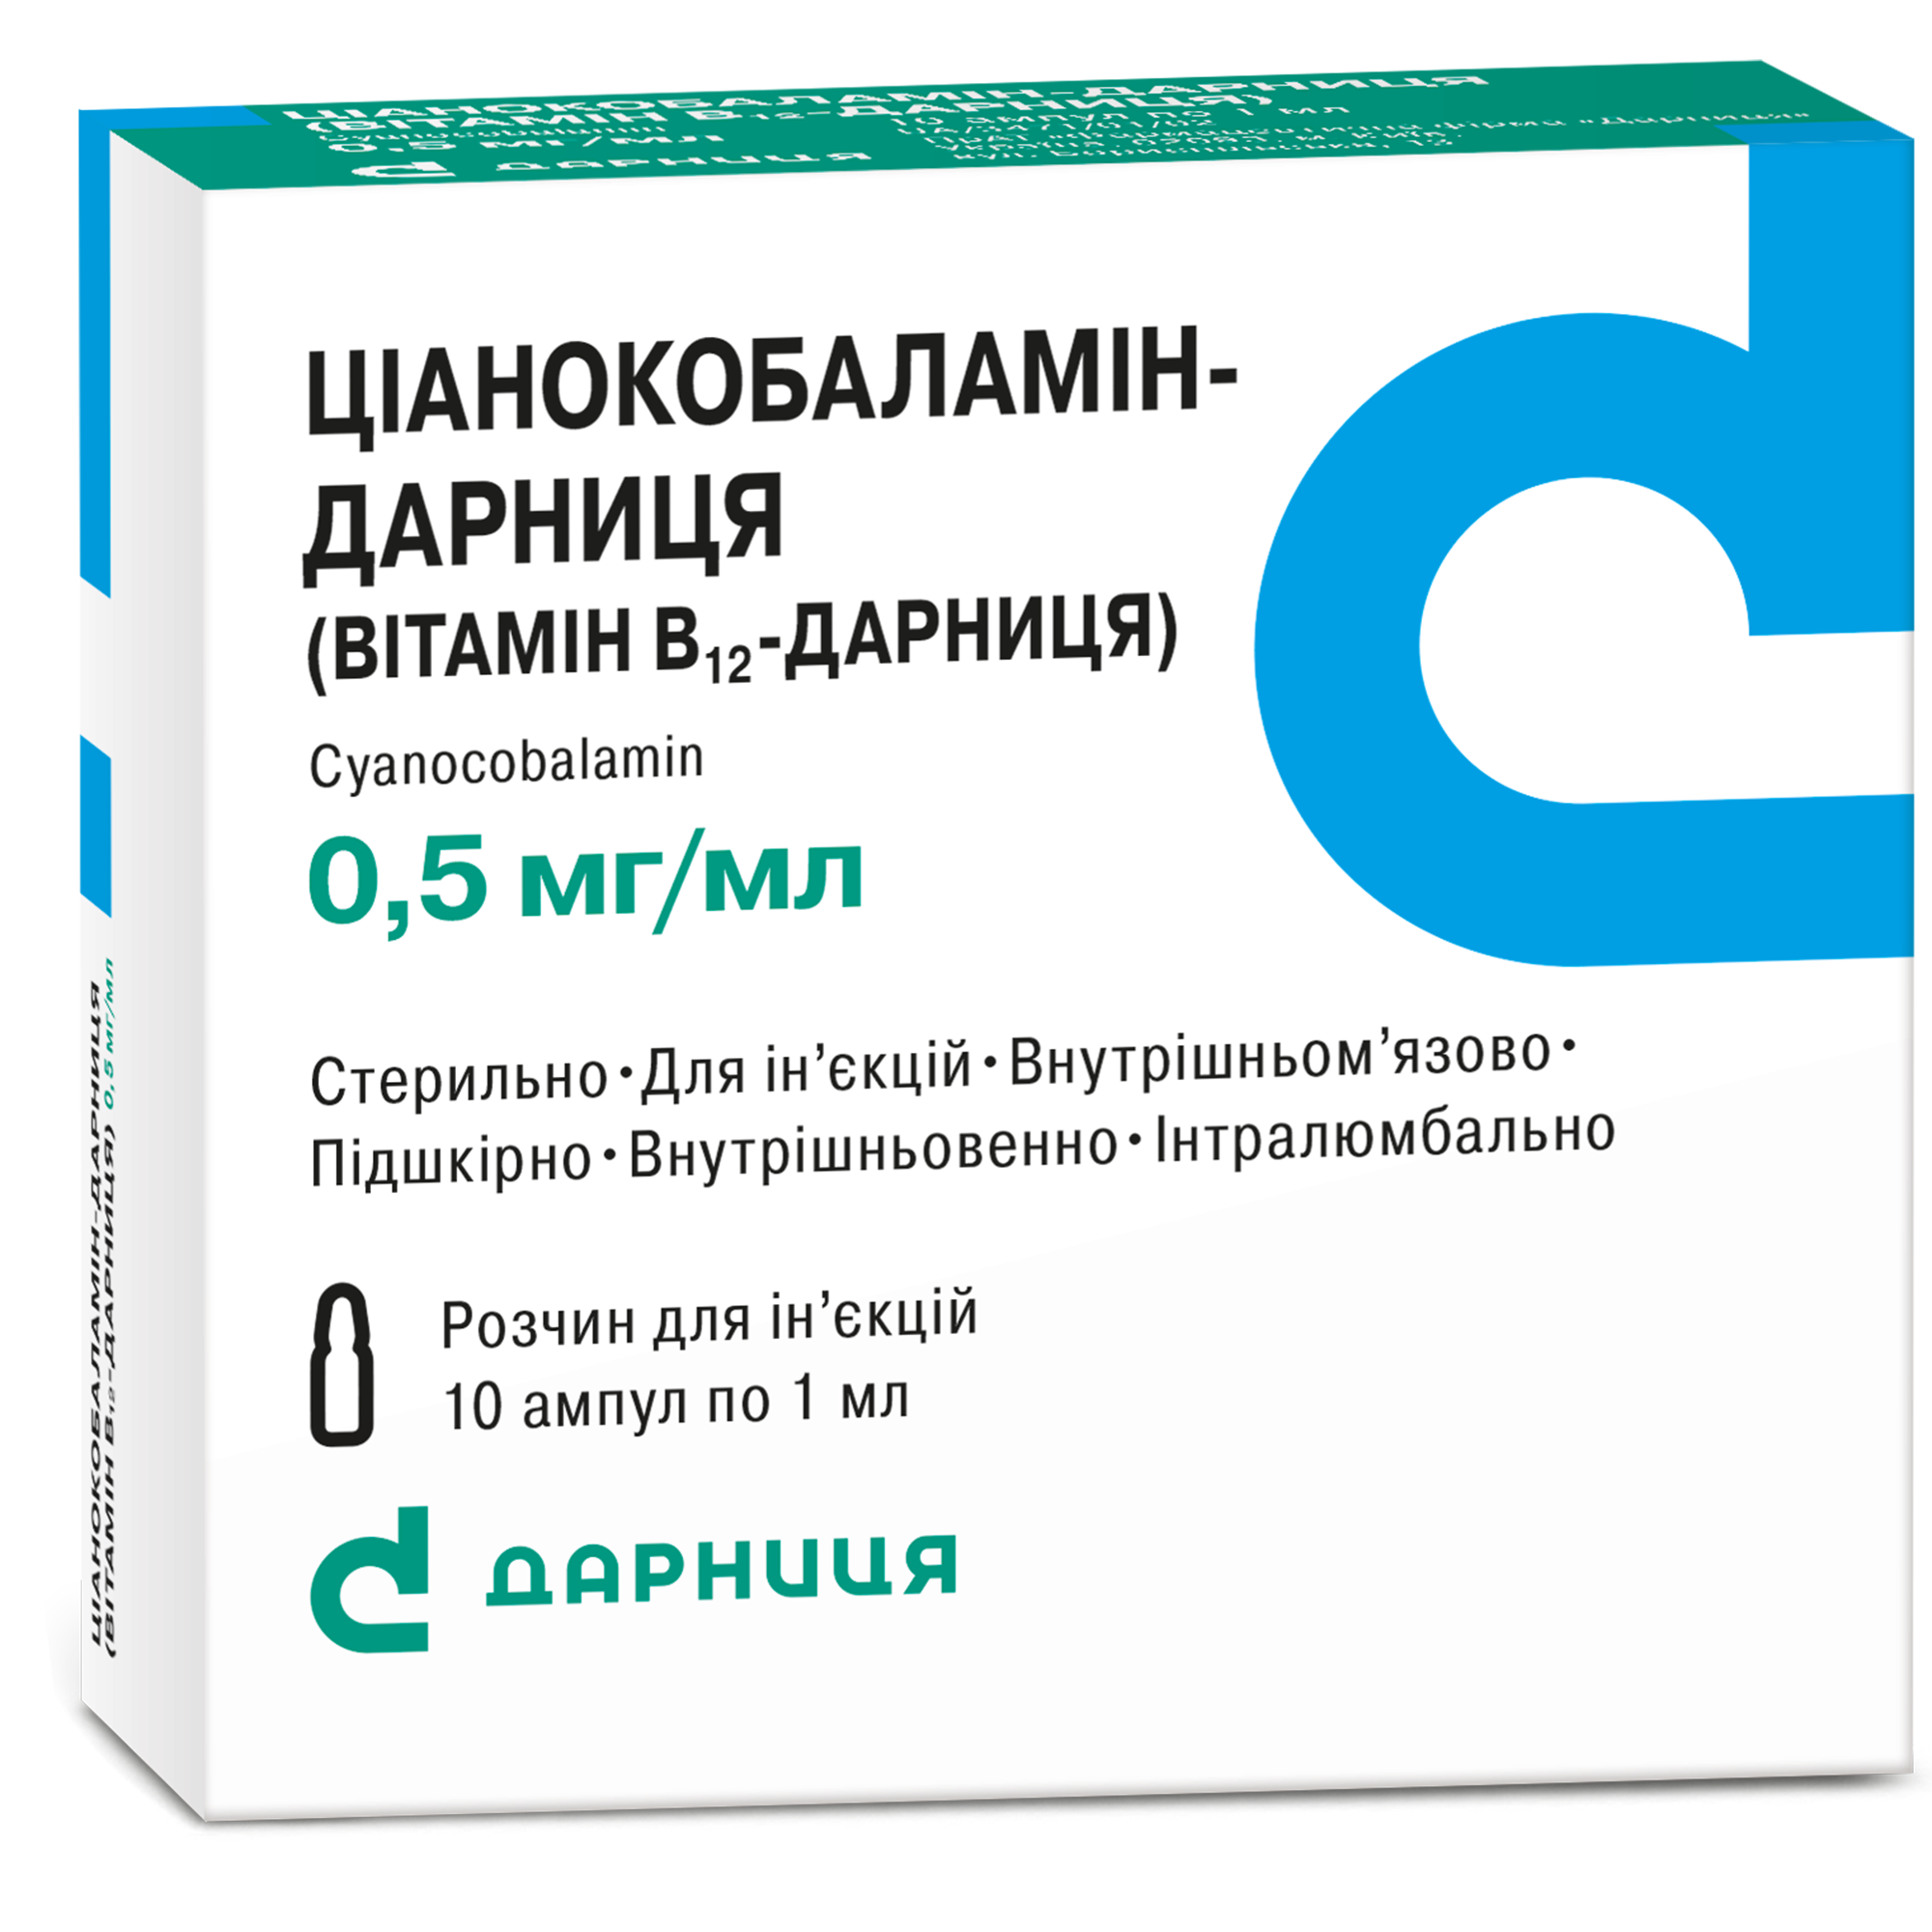 Cyanocobalamine-Darnitsa